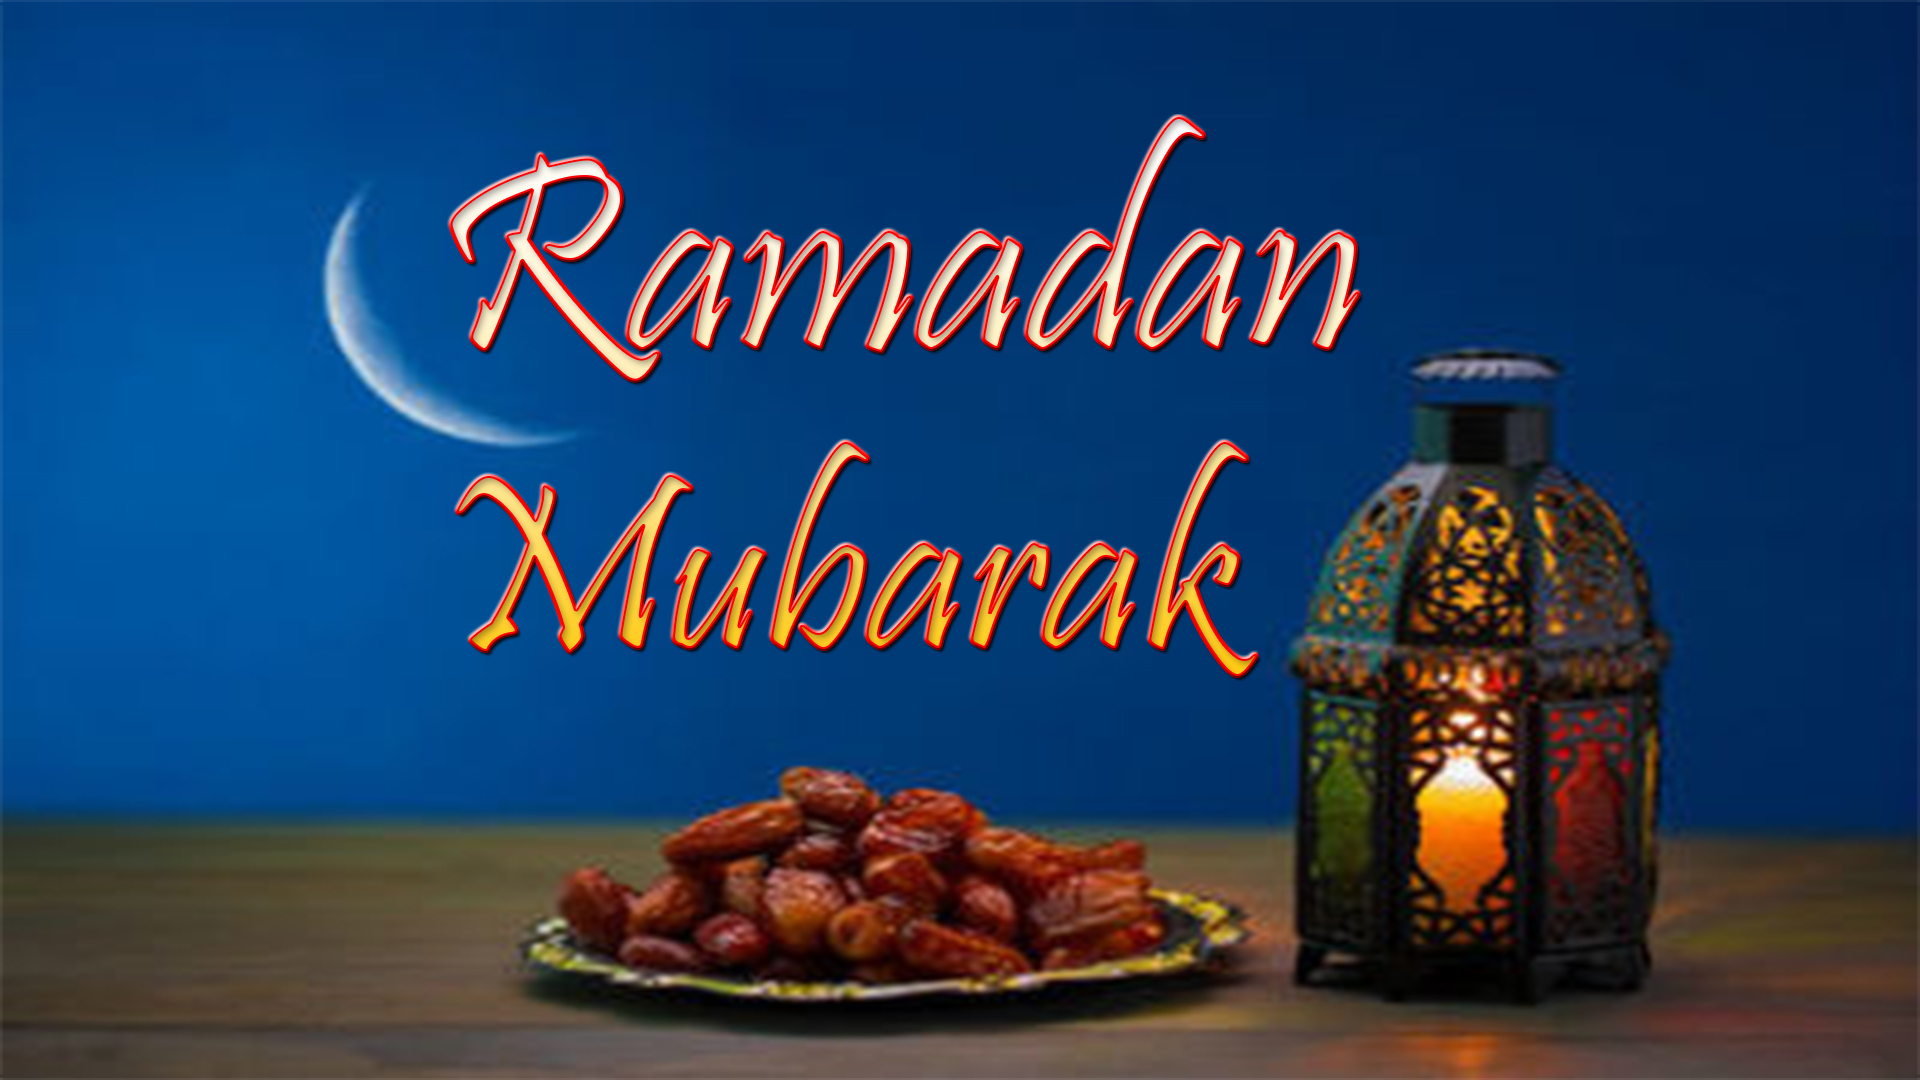 Ramadan Mubarak Images, Pictures & Wallpapers